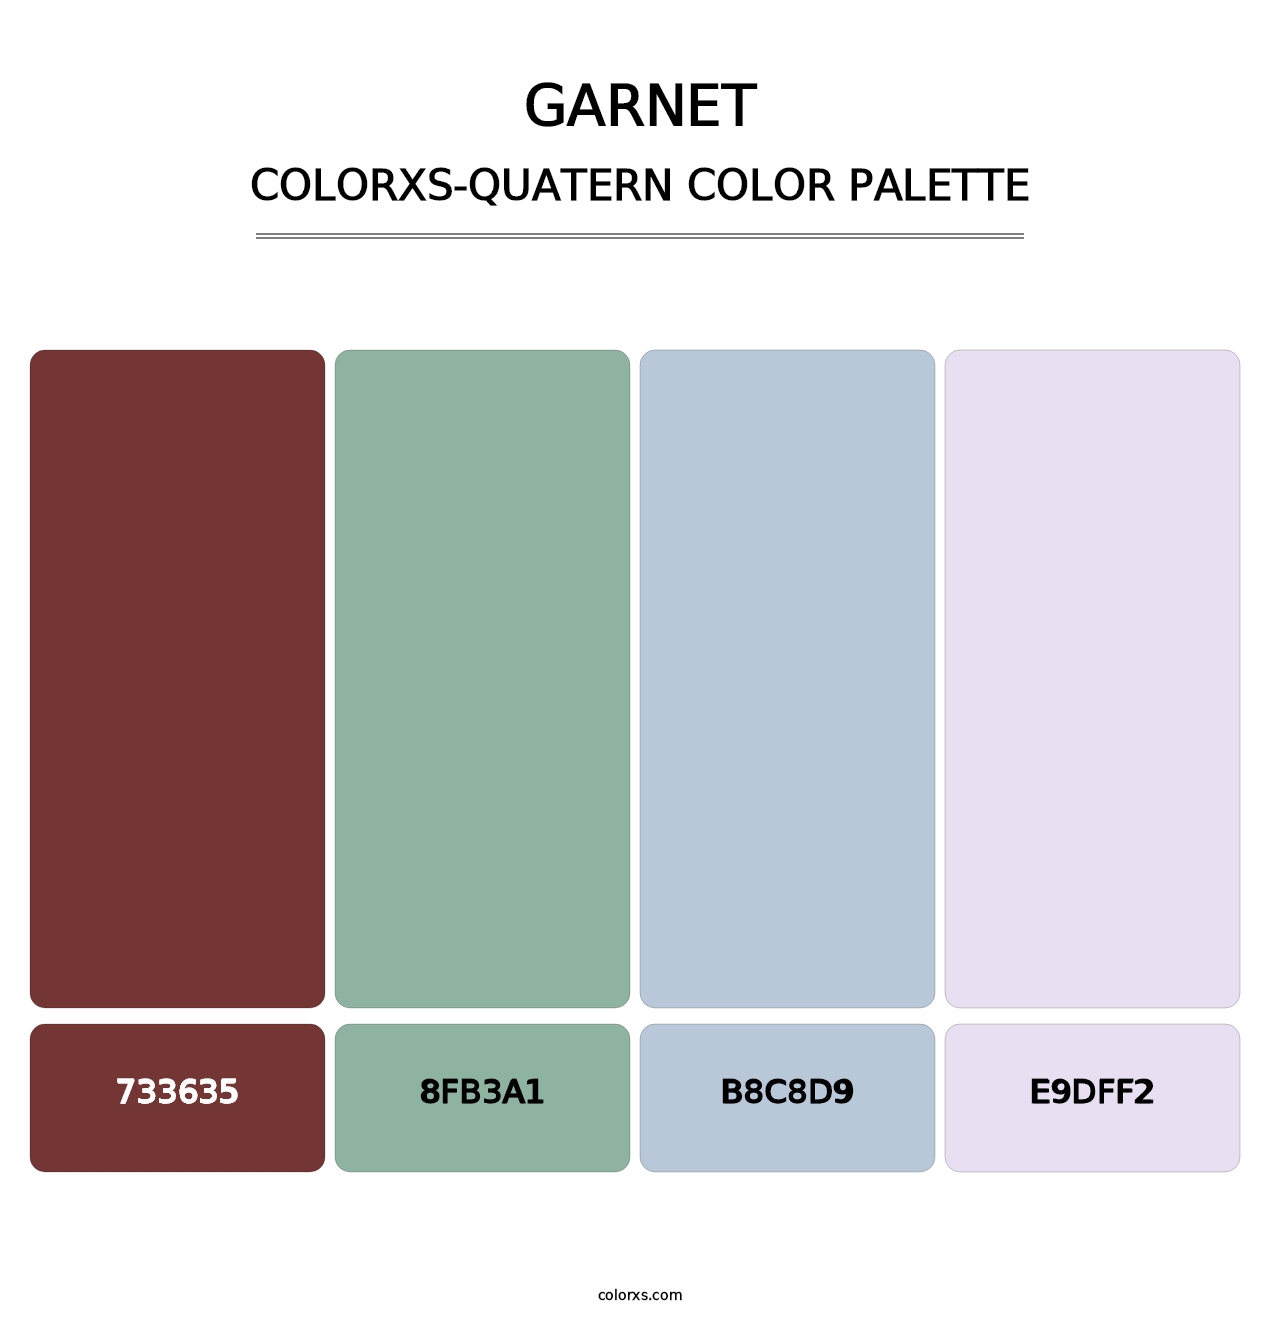 Garnet - Colorxs Quatern Palette